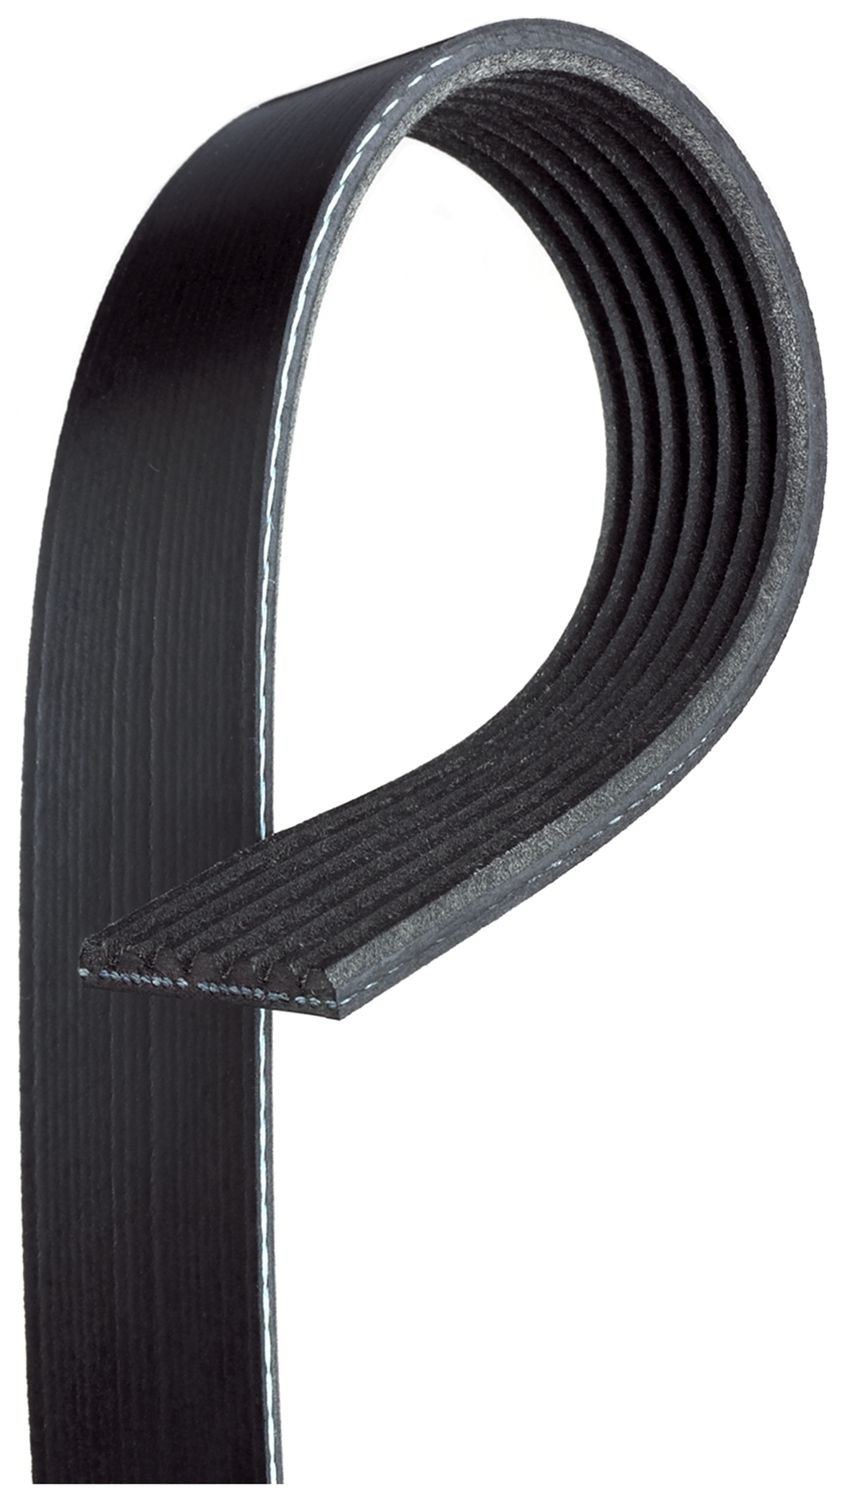 GATES 7PK1855 Serpentine belt 1855mm, 7, G-Force™ C12™ CVT Belt